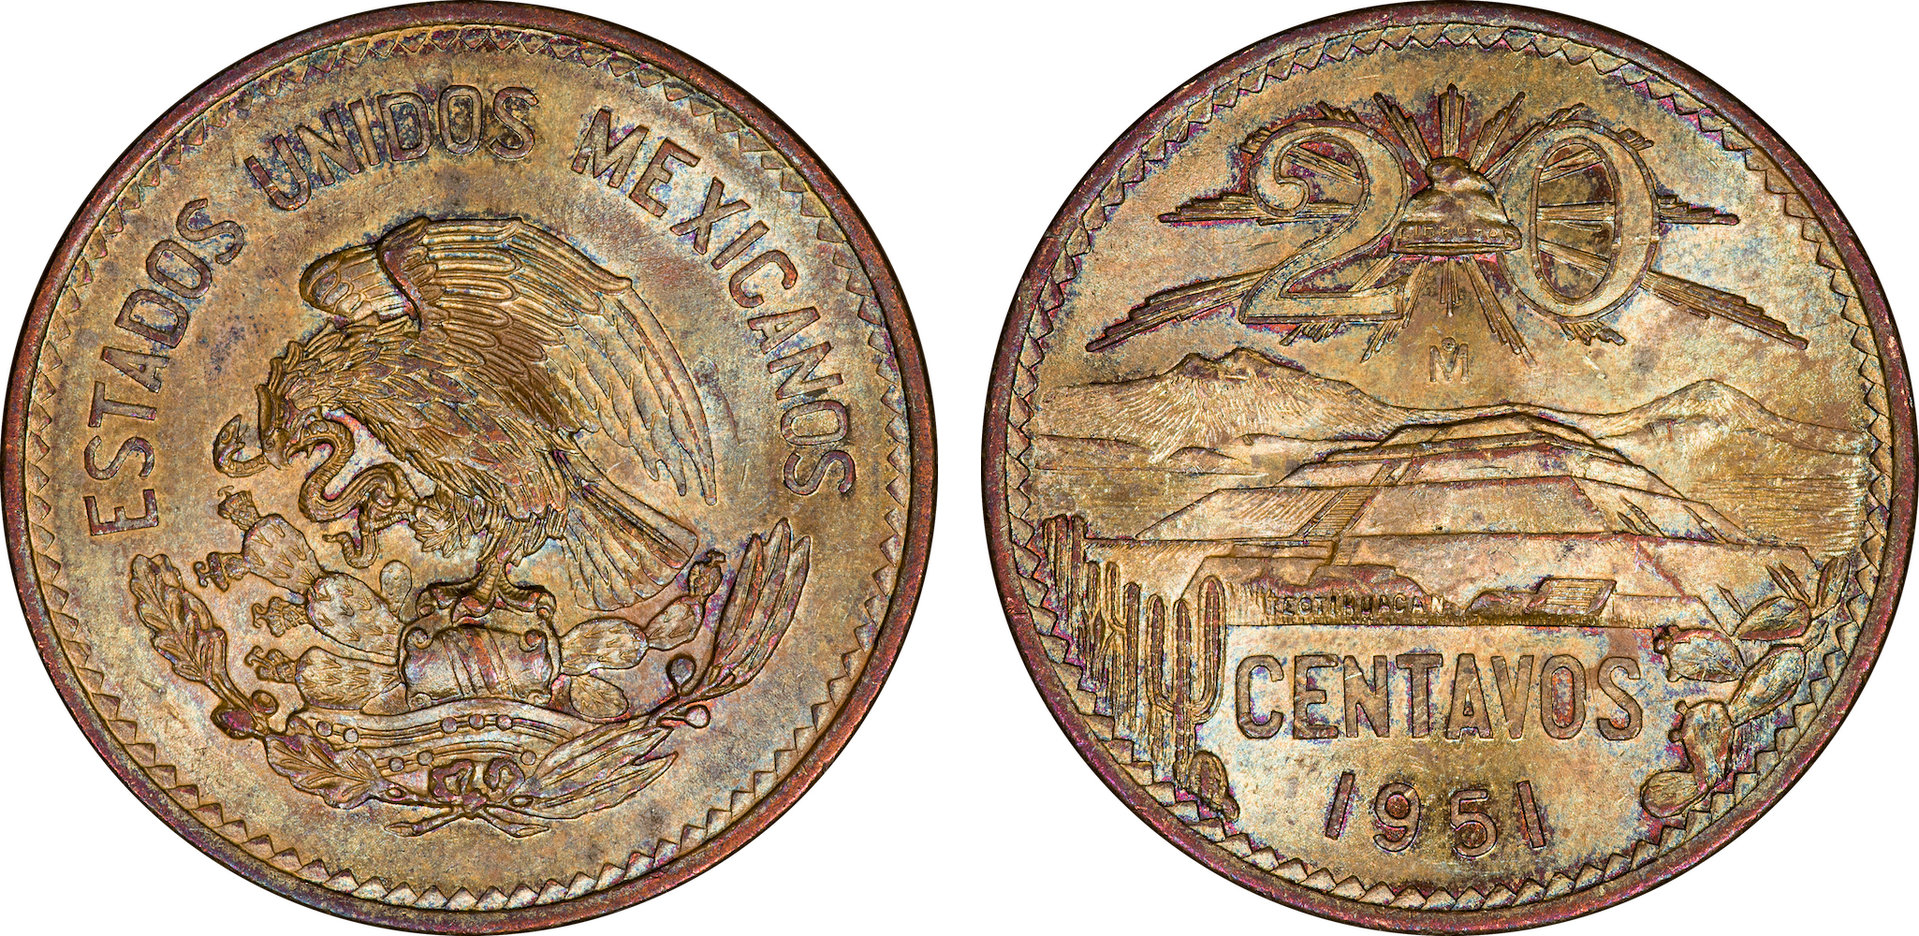 Mexico - 1951 20 Centavos.jpg